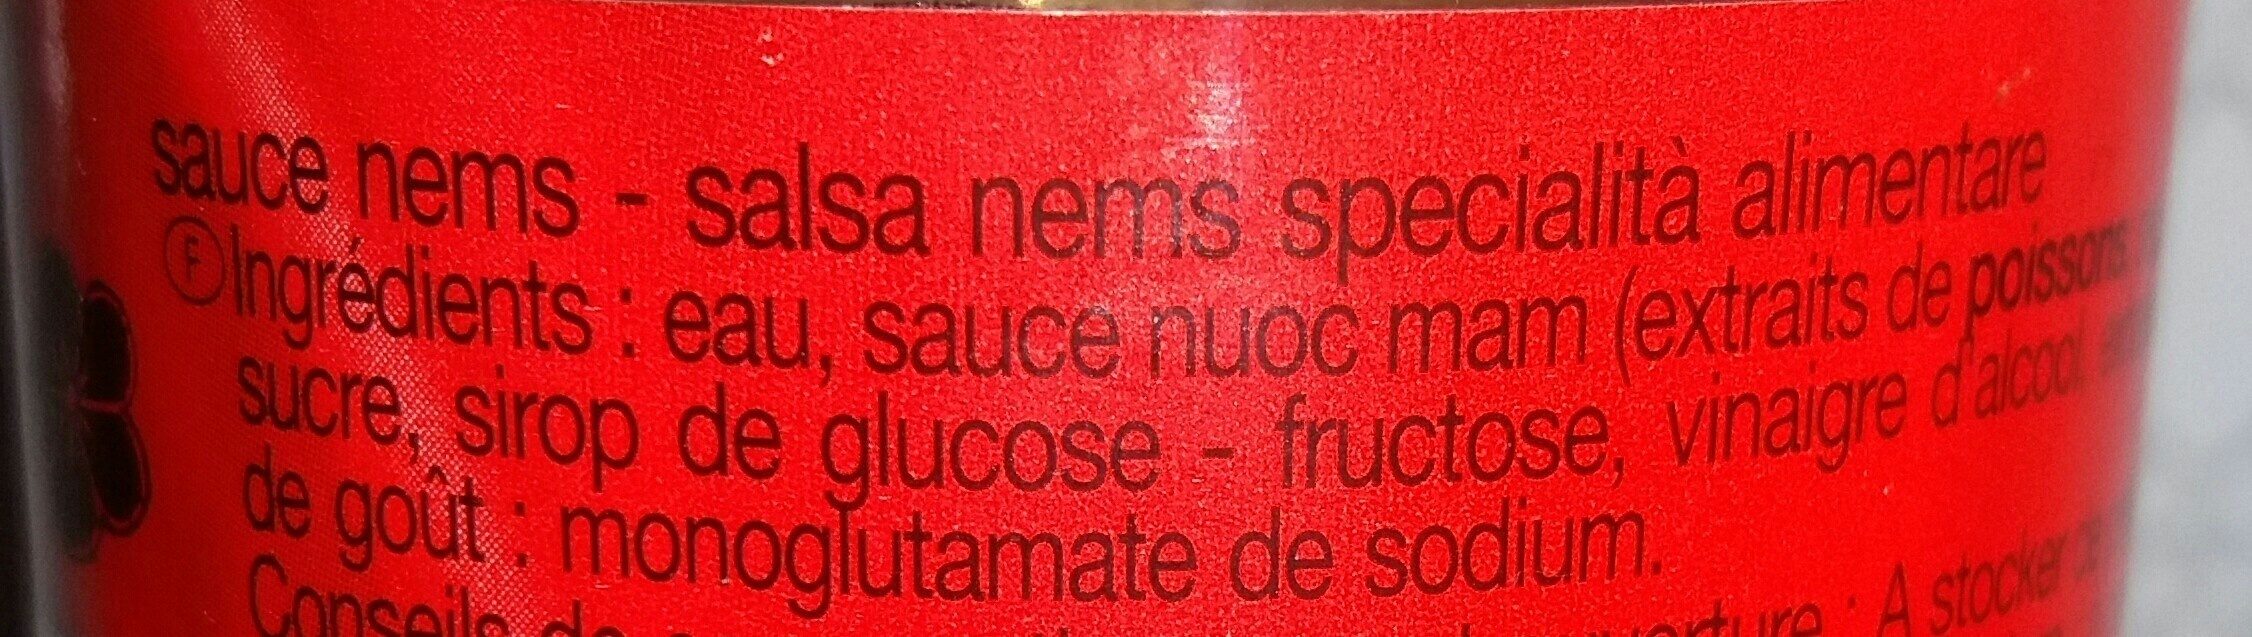 Sauce salsa mocho NEMS - Ingredients - fr